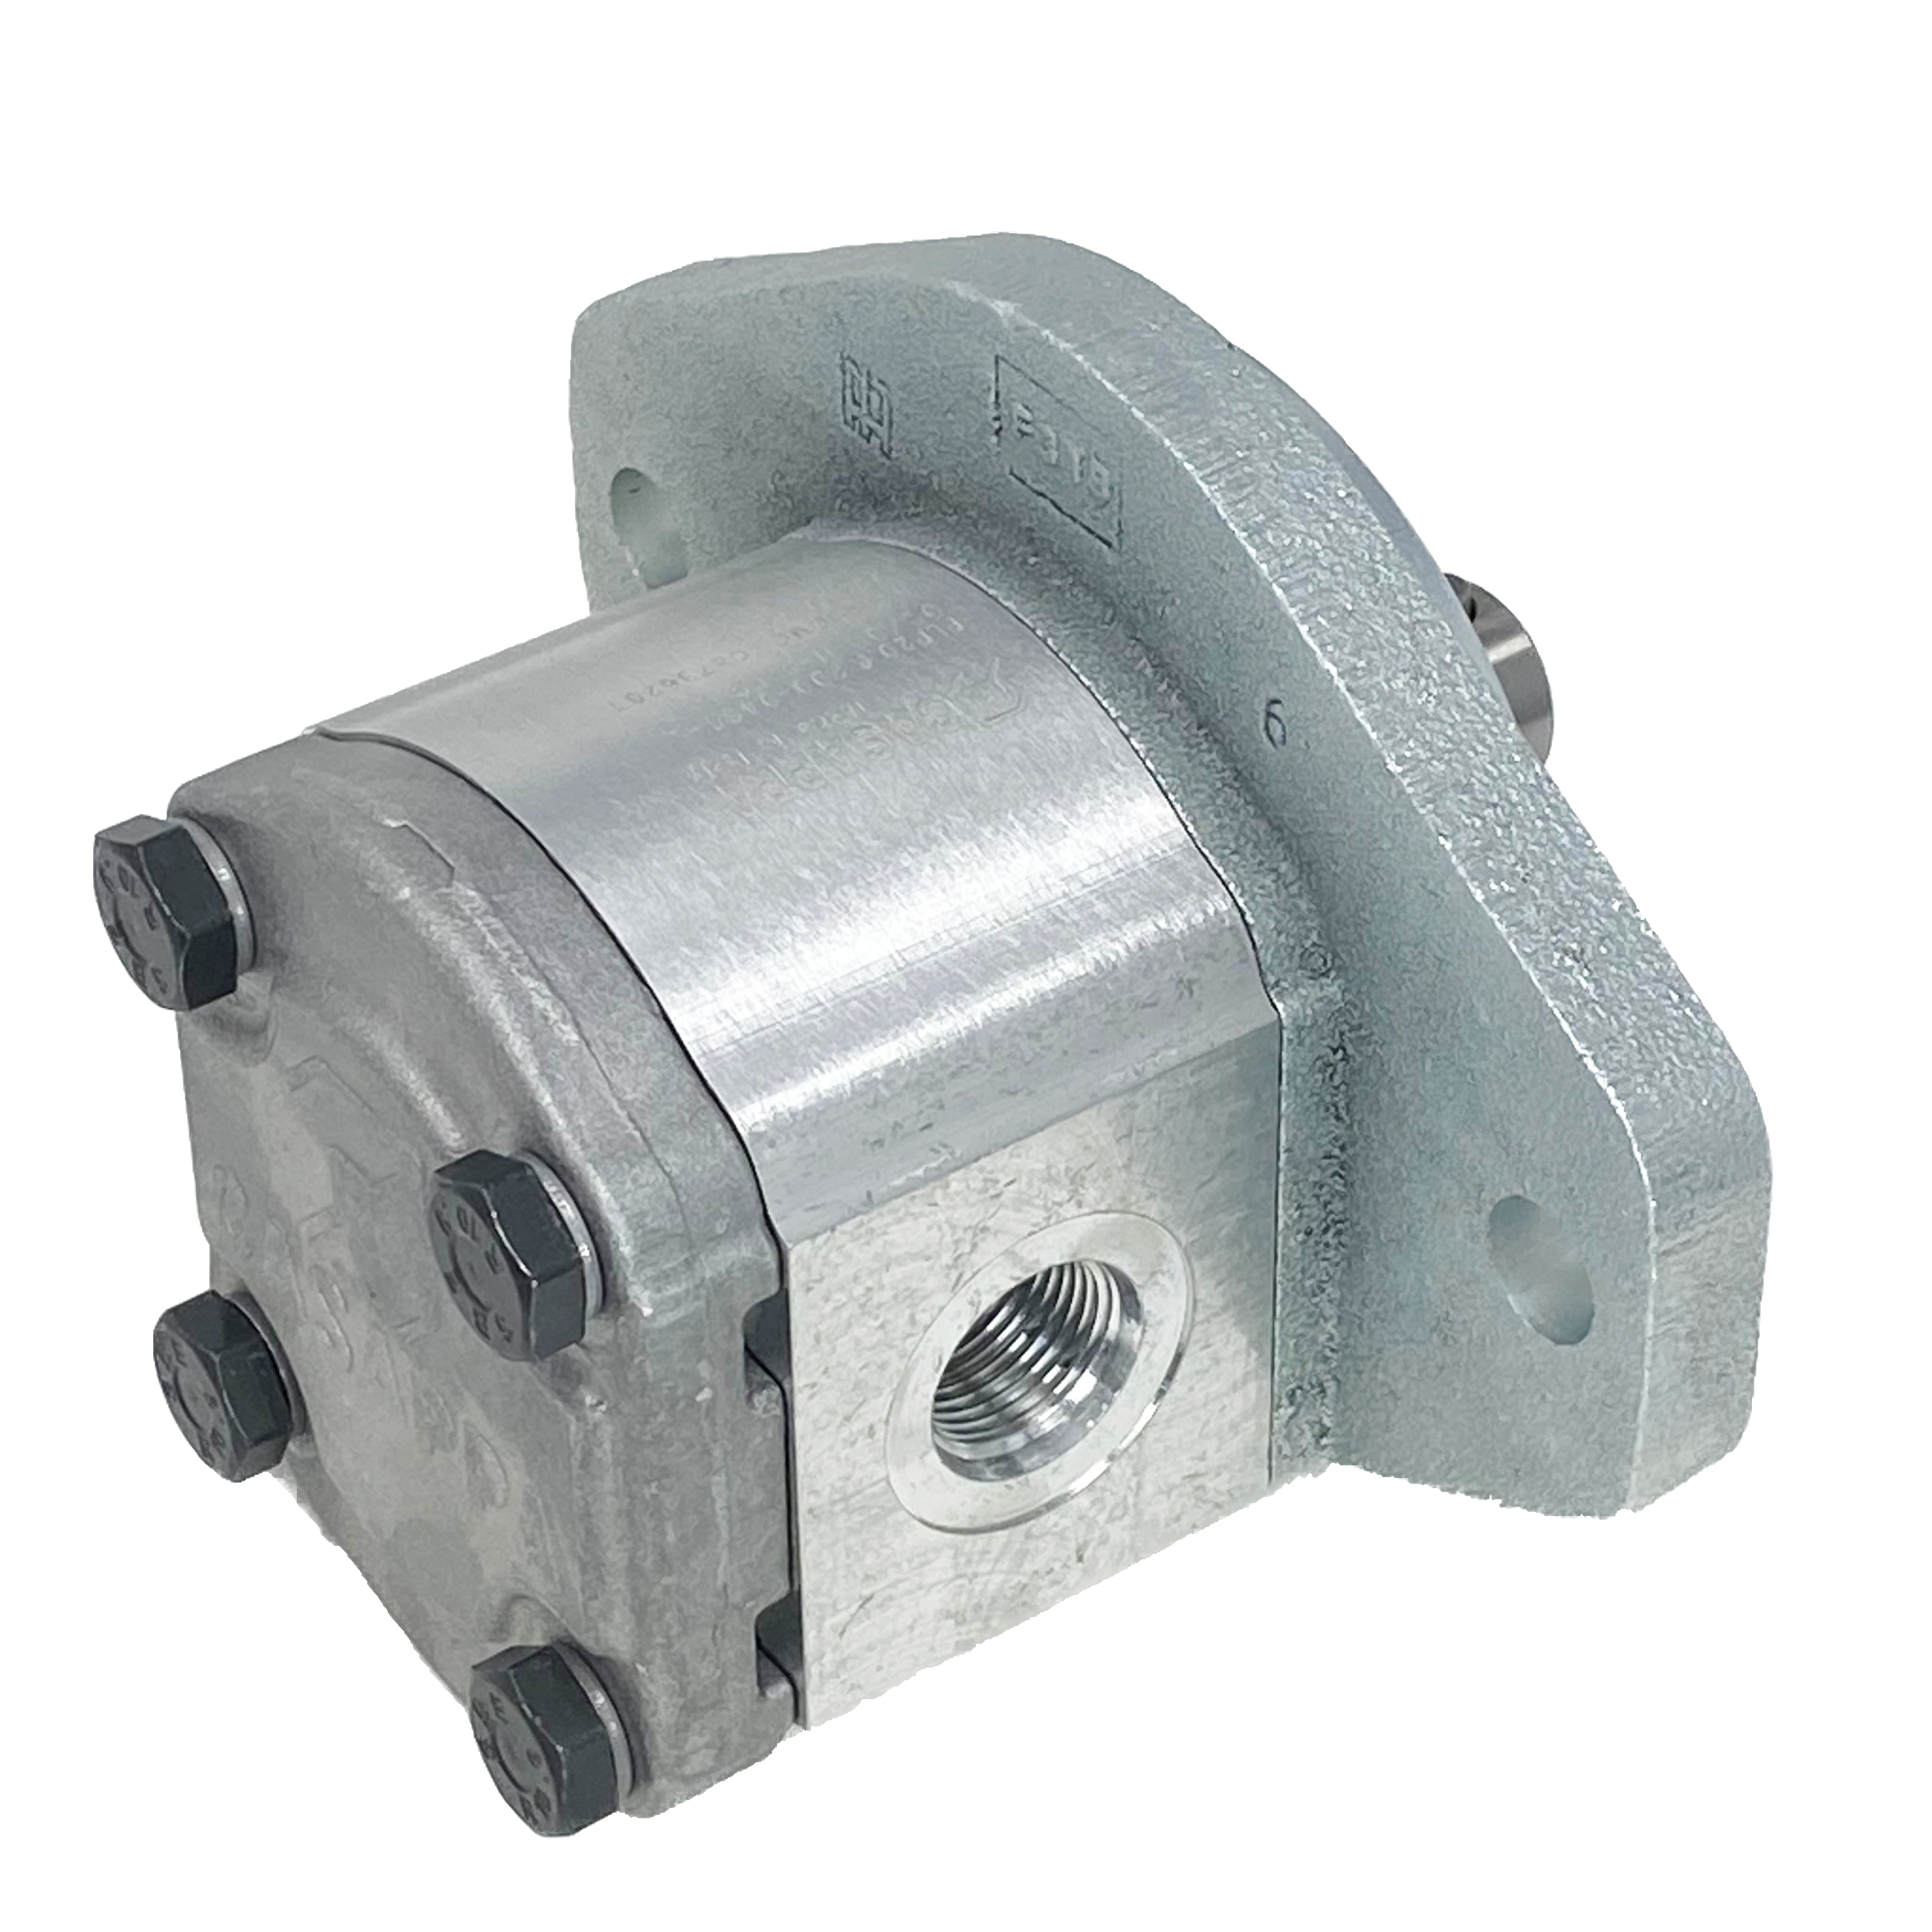 PLM20.9R0-31S1-LOC/OC-N-EL : Casappa Polaris Gear Motor, 9.17cc, 3625psi Rated, 3500RPM, Reversible Rear External Drain, 5/8" Bore x 5/32" Key Shaft, SAE A 2-Bolt Flange, 0.625 (5/8") #10 SAE Inlet, 0.625 (5/8") #10 SAE Outlet, Aluminum Body & Flange